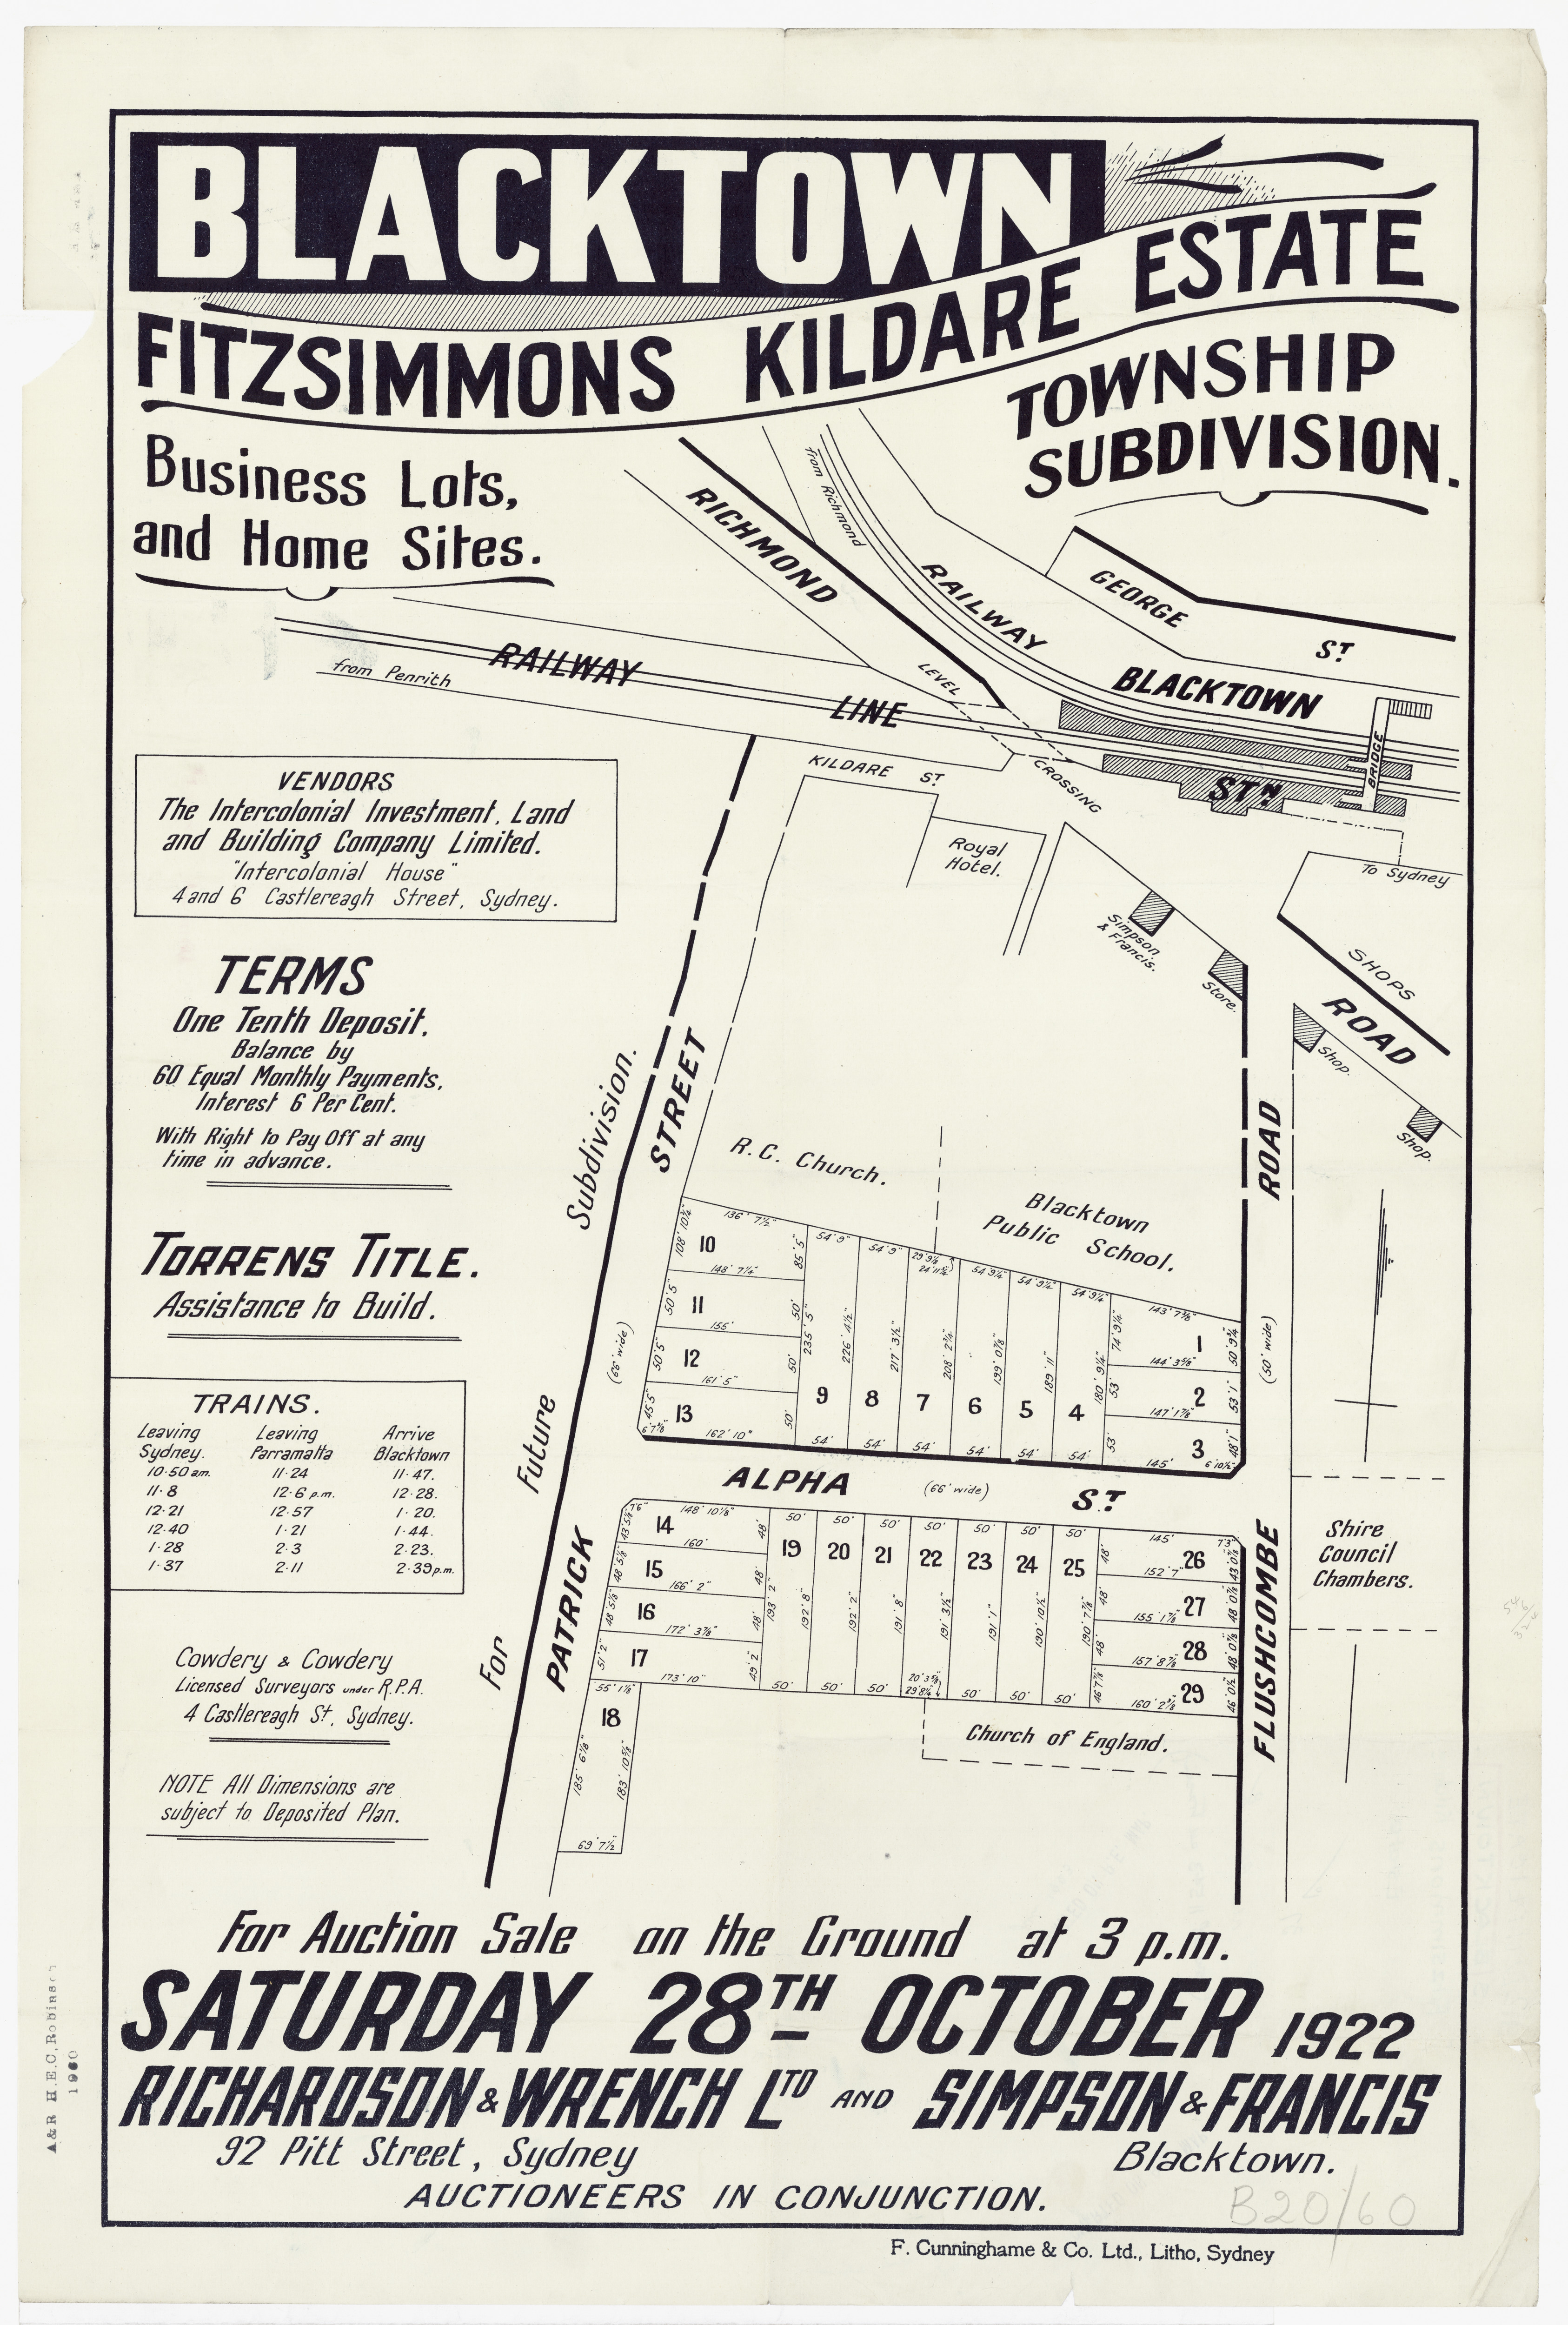 Subdivision Plan: 074 - Z/SP/B20/60 - Blacktown Fitzsimmons Kildare Estate Township subdivision - Patrick St, Flushcombe Rd , 1922